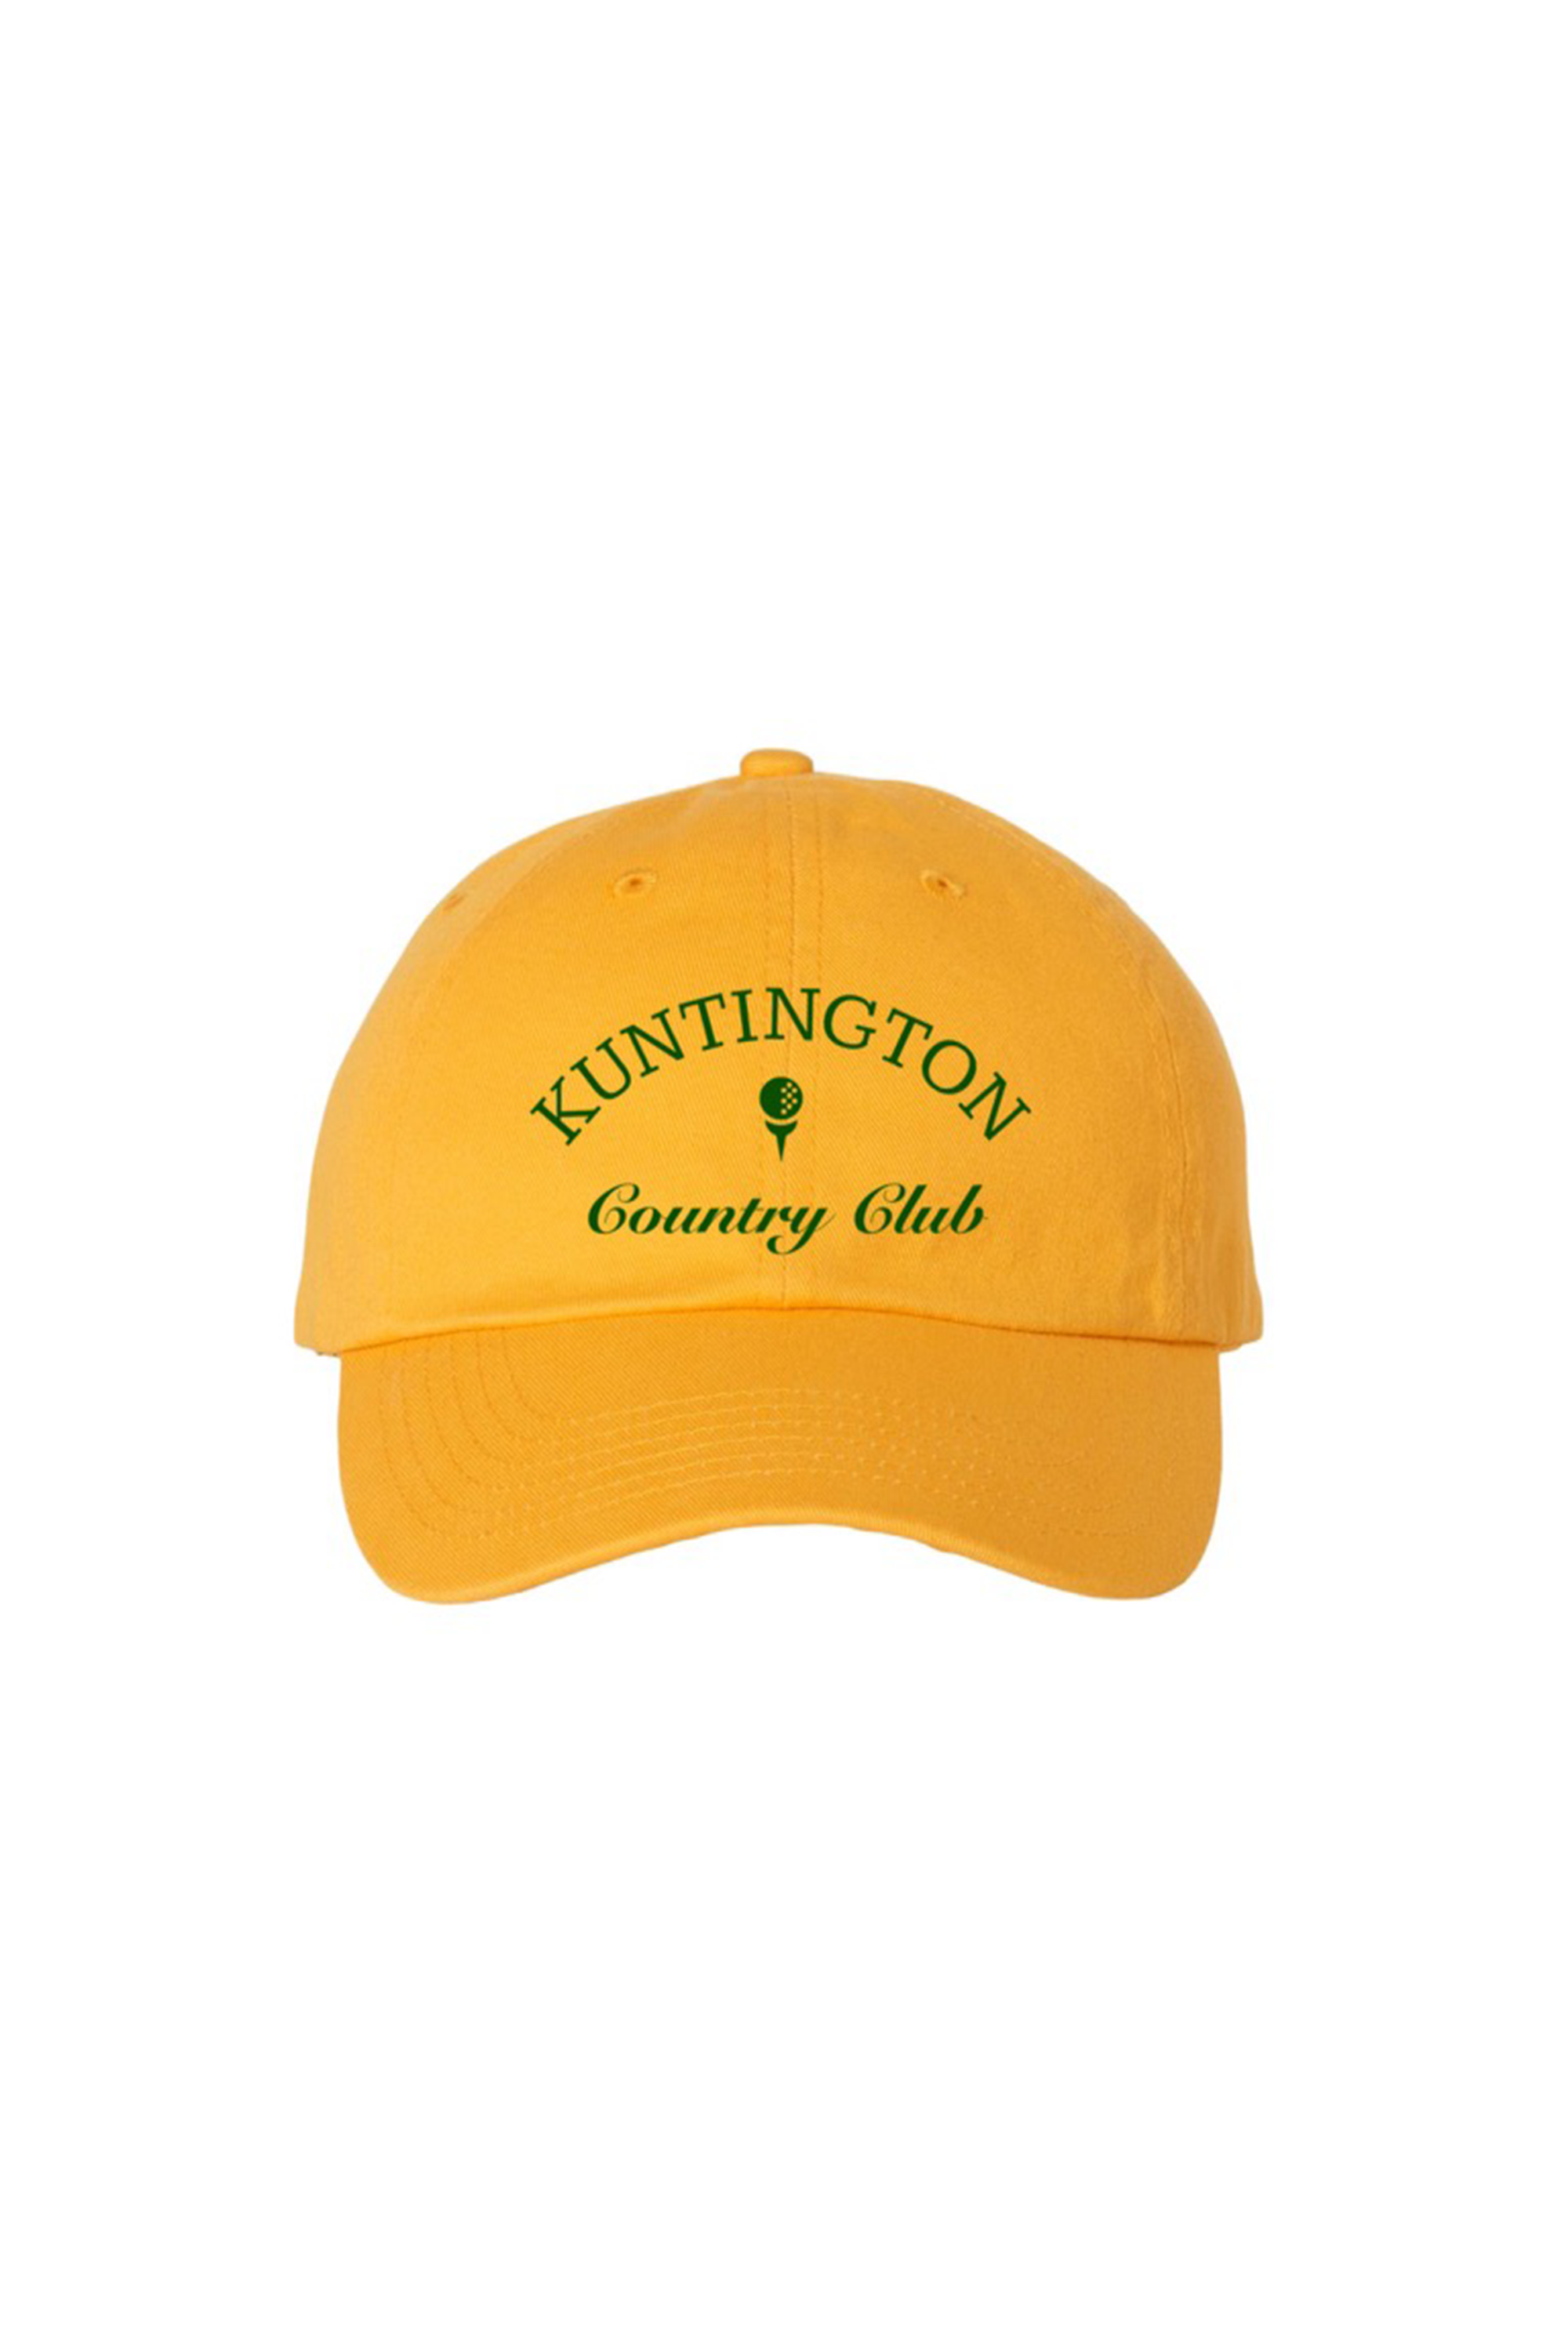 Kuntington Country Club Hat